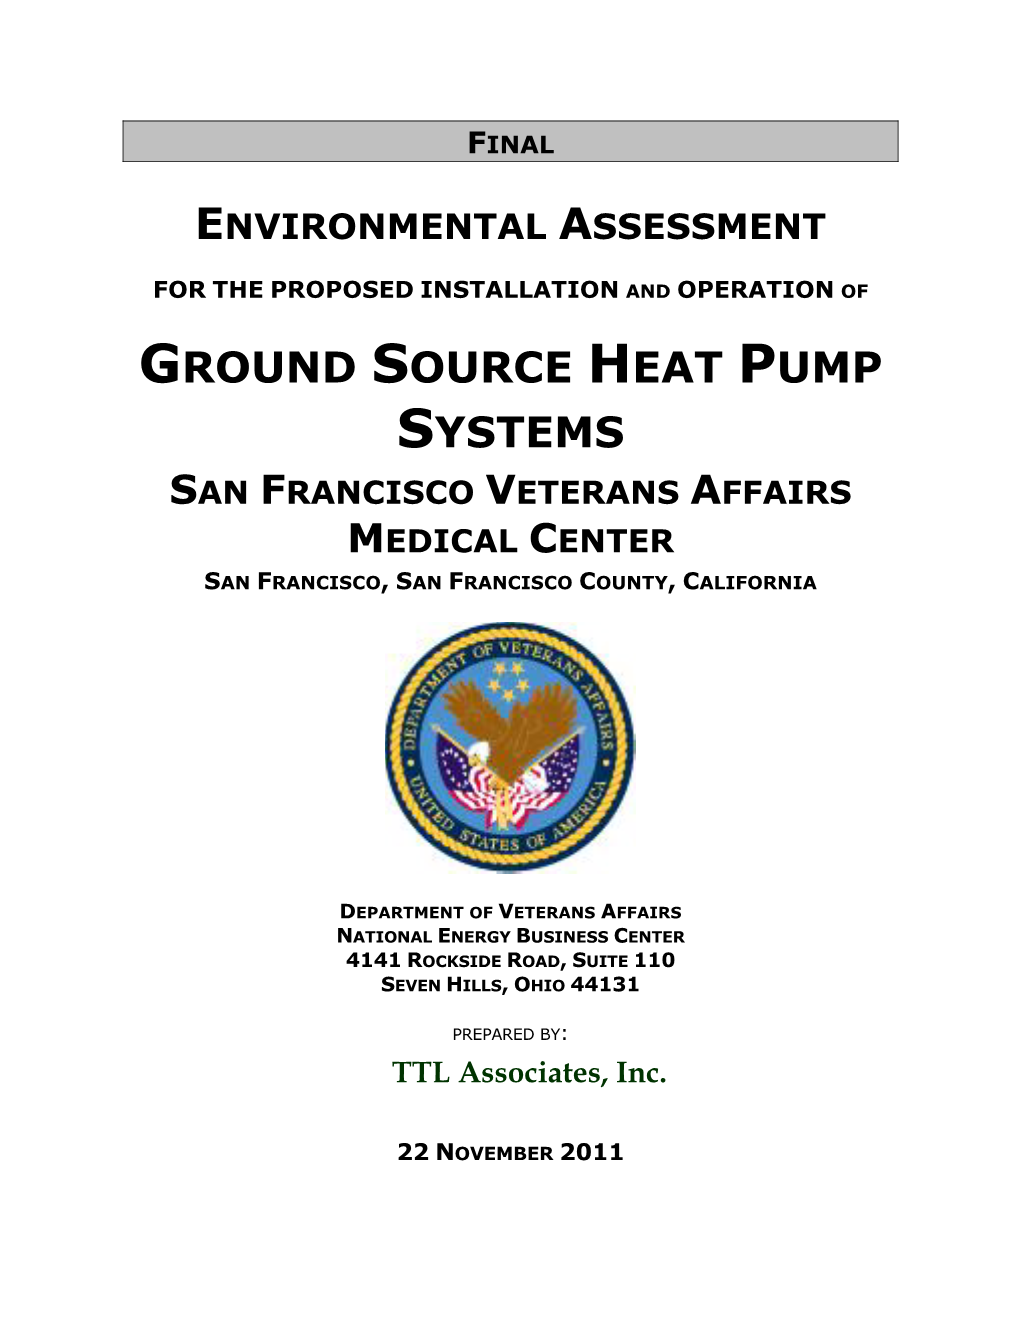 Ground Source Heat Pump Systems San Francisco Veterans Affairs Medical Center San Francisco, San Francisco County, California